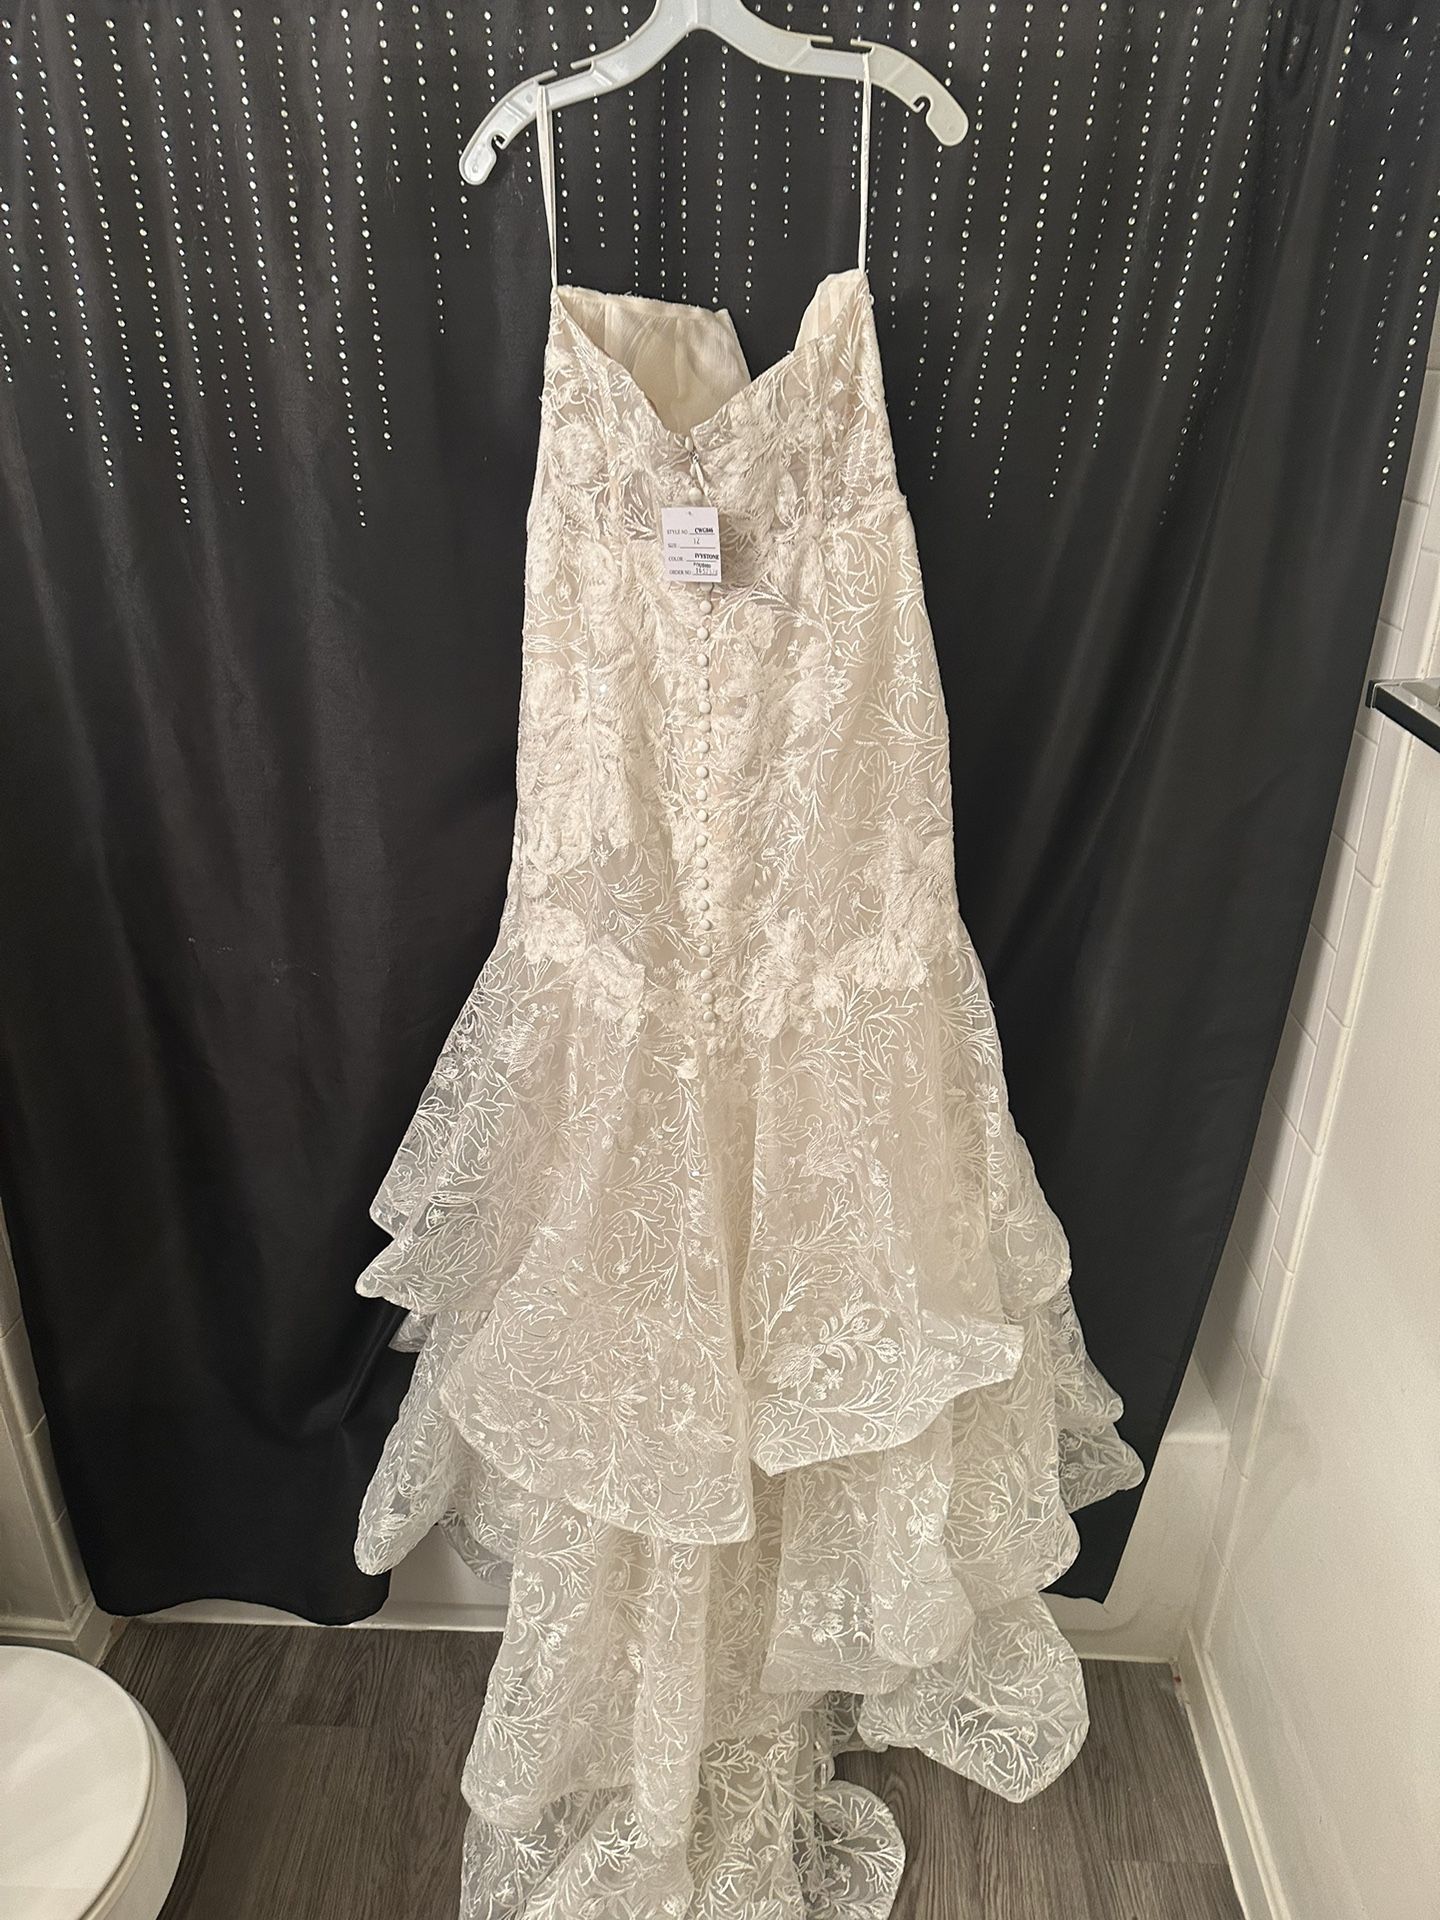 david’s bridal dress 